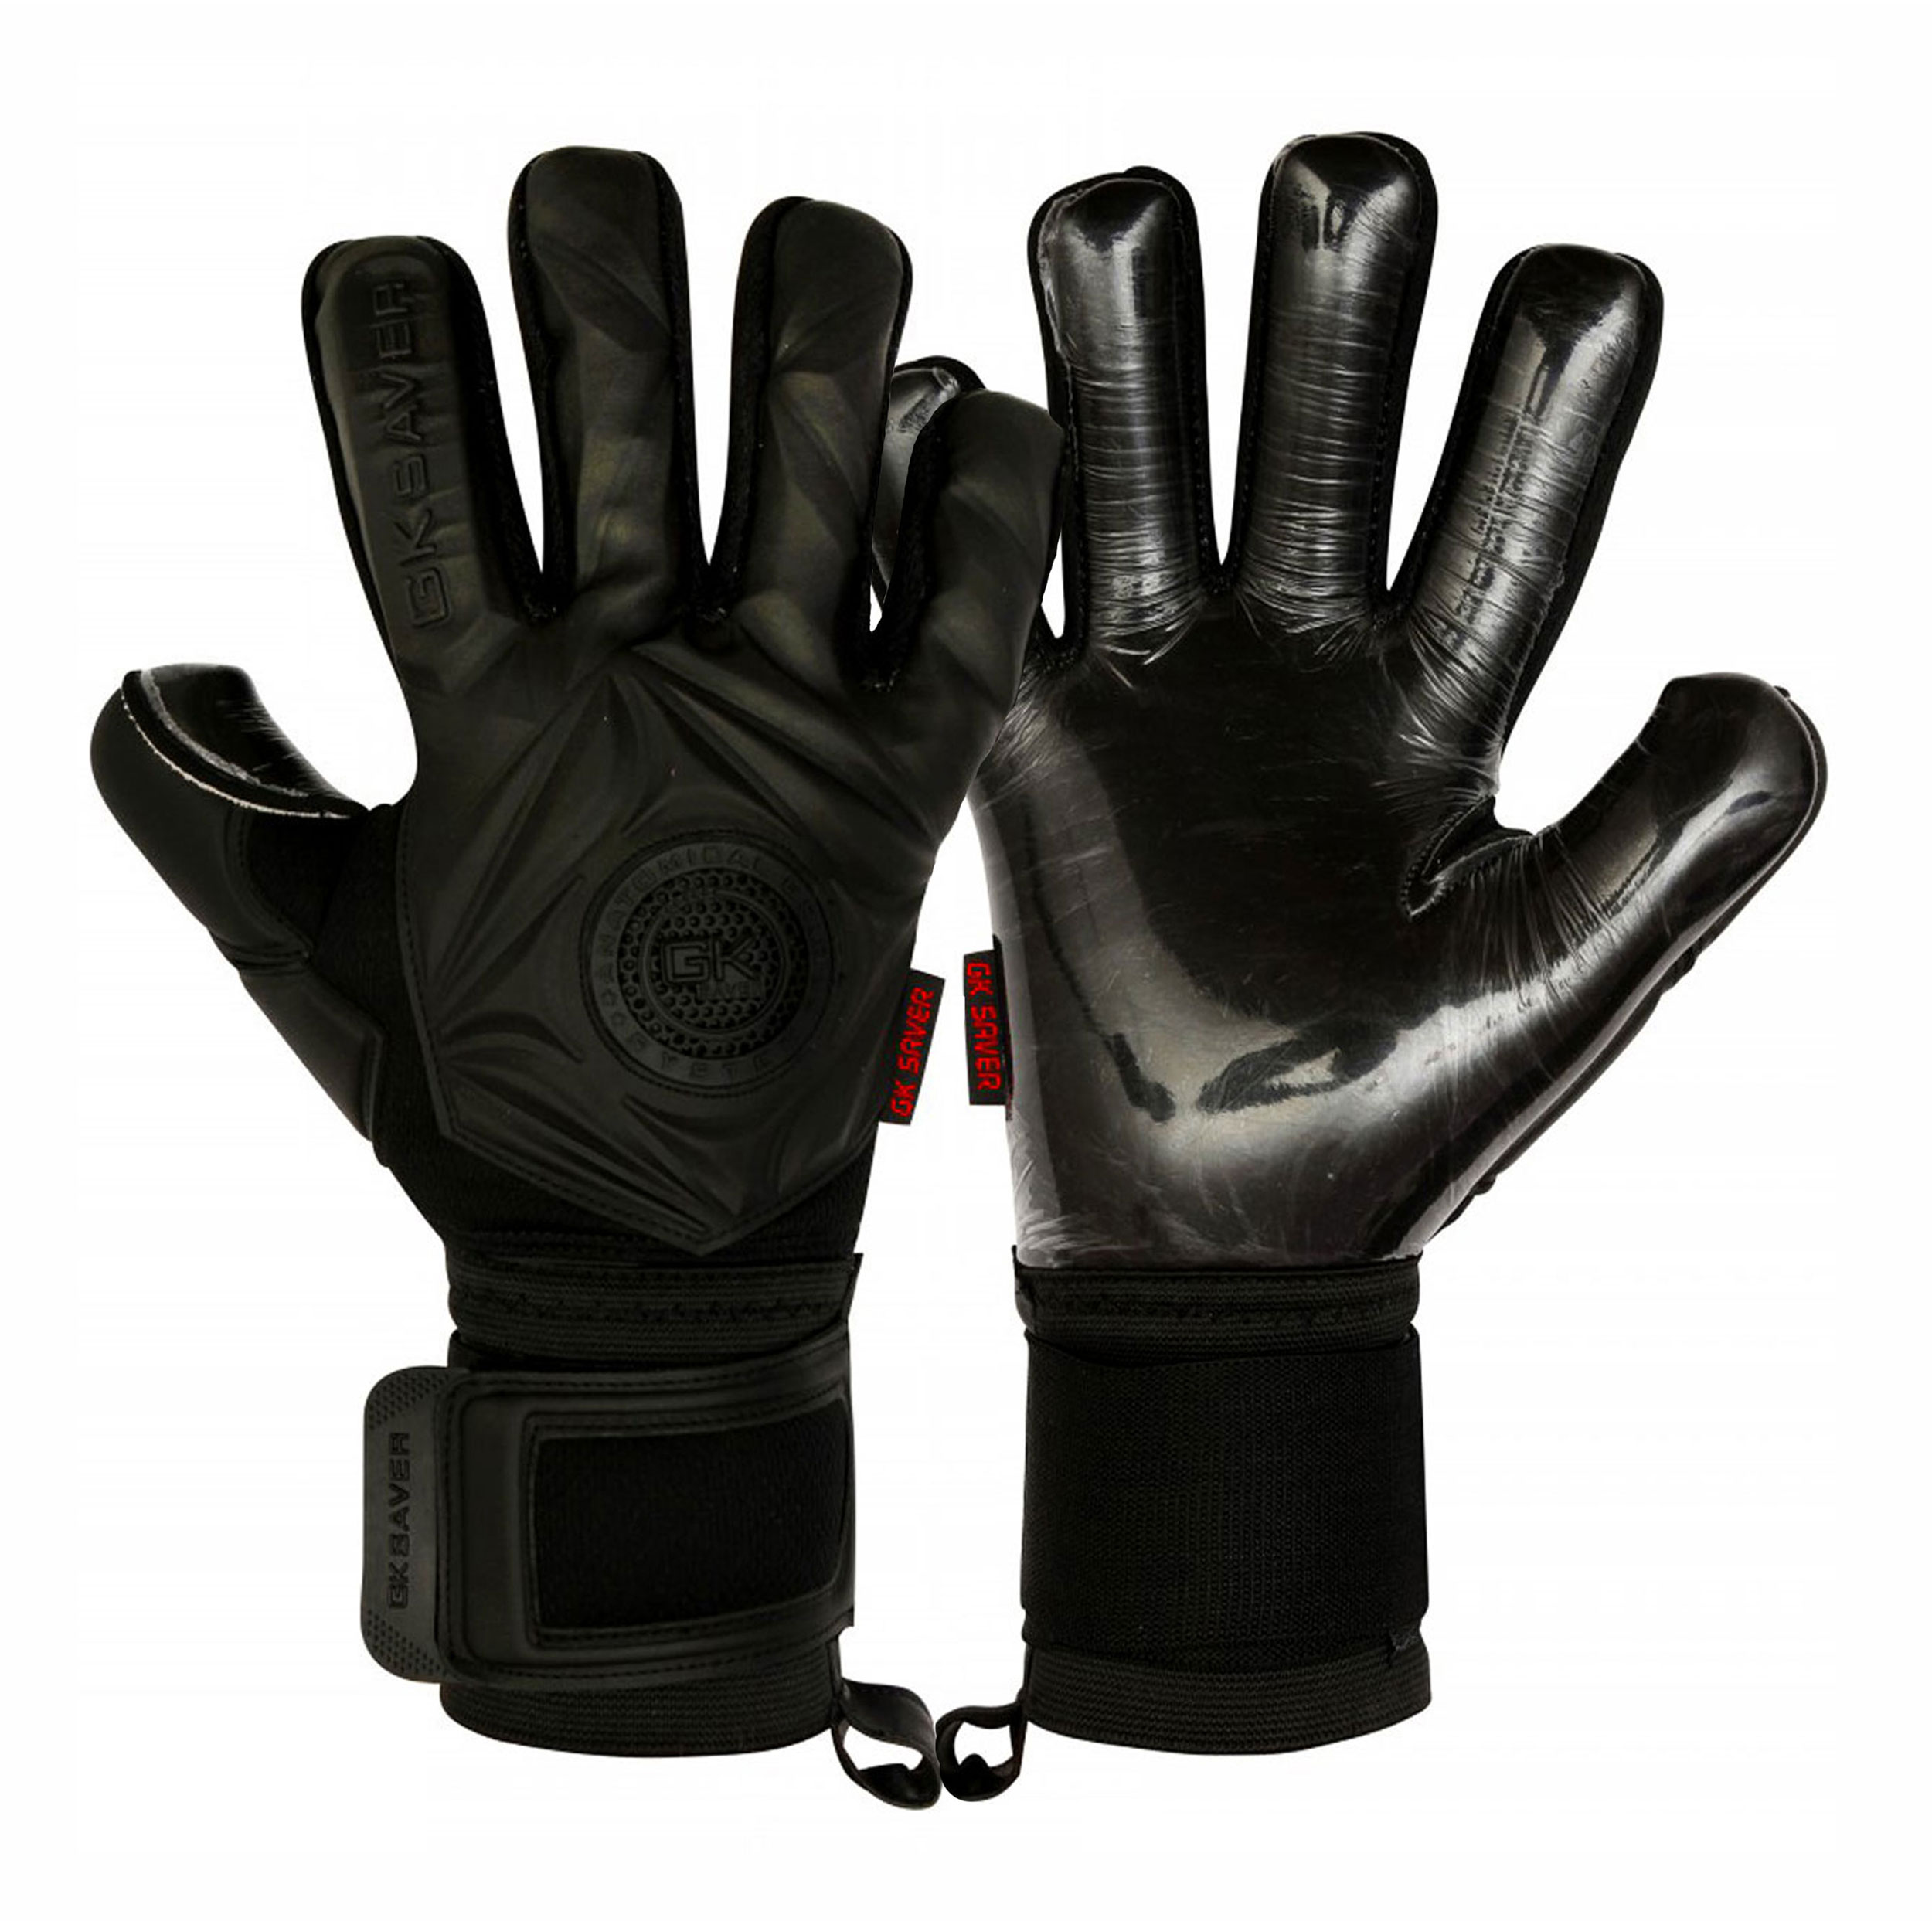 Gk Saver Prime Pro Black/Blue Football goalkeeper Gloves Size 6-11 